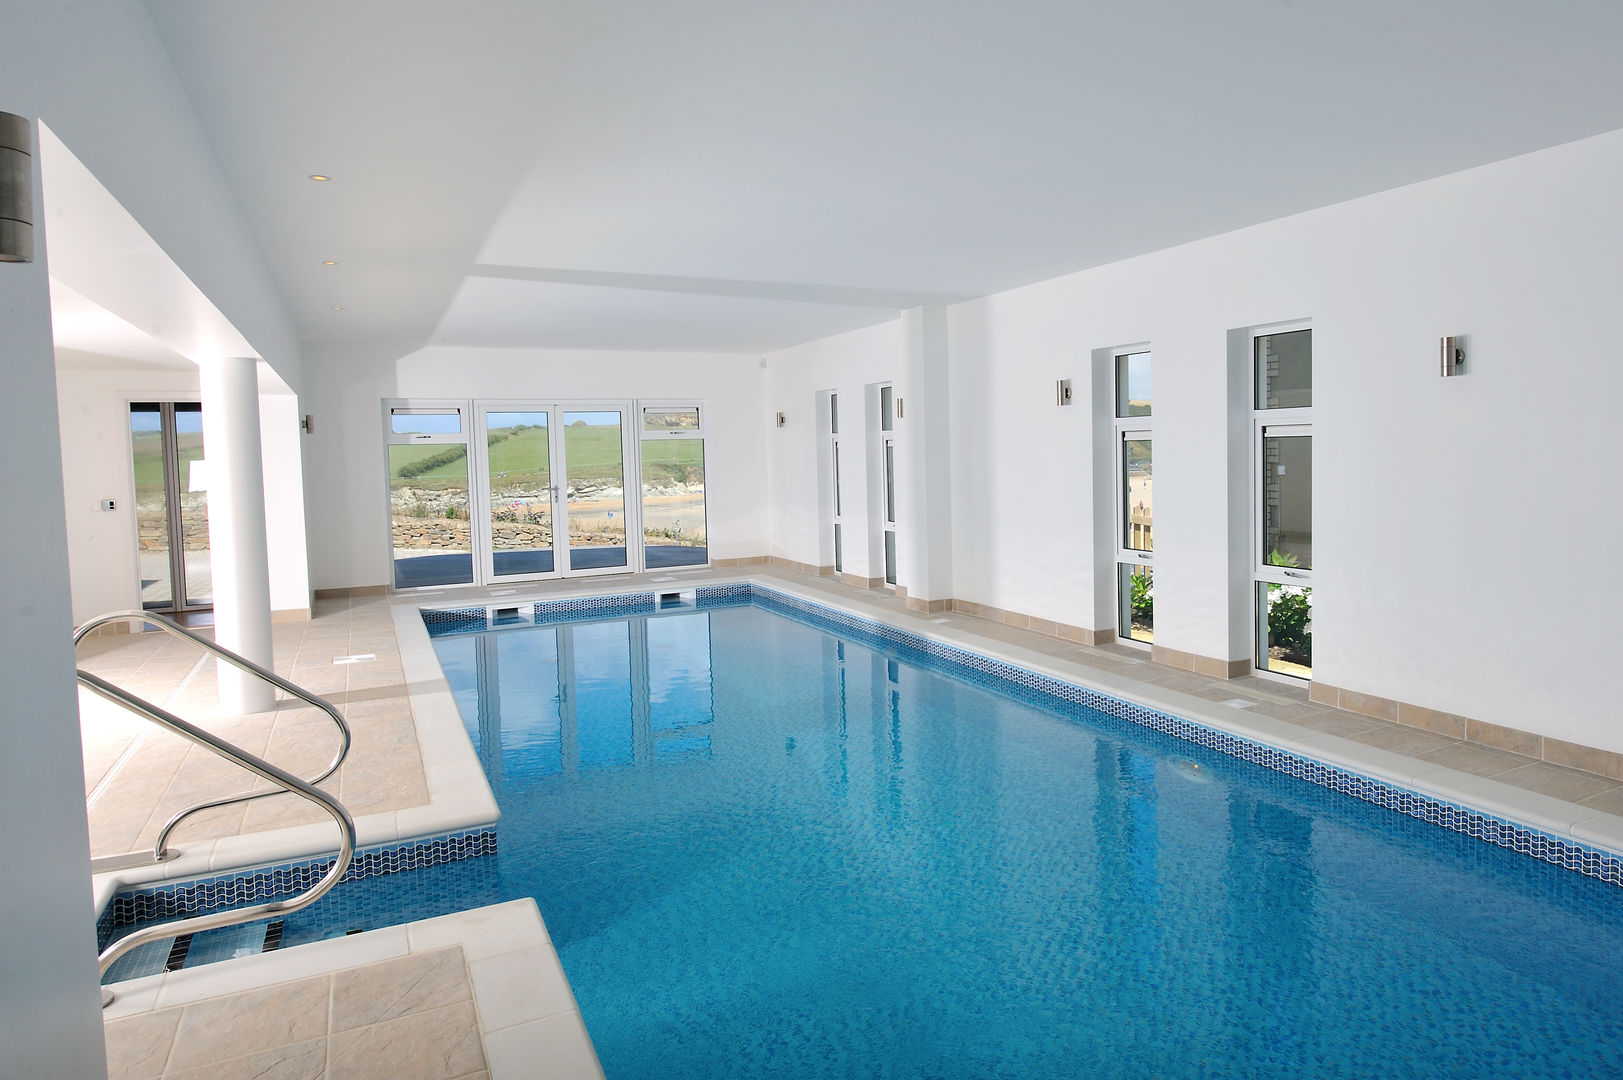 Sea House, Porth | Cornwall, Perfect Stays Perfect Stays สระว่ายน้ำ pool,indoor pool,swimming pool,luxury,holiday home,beach house,beach views